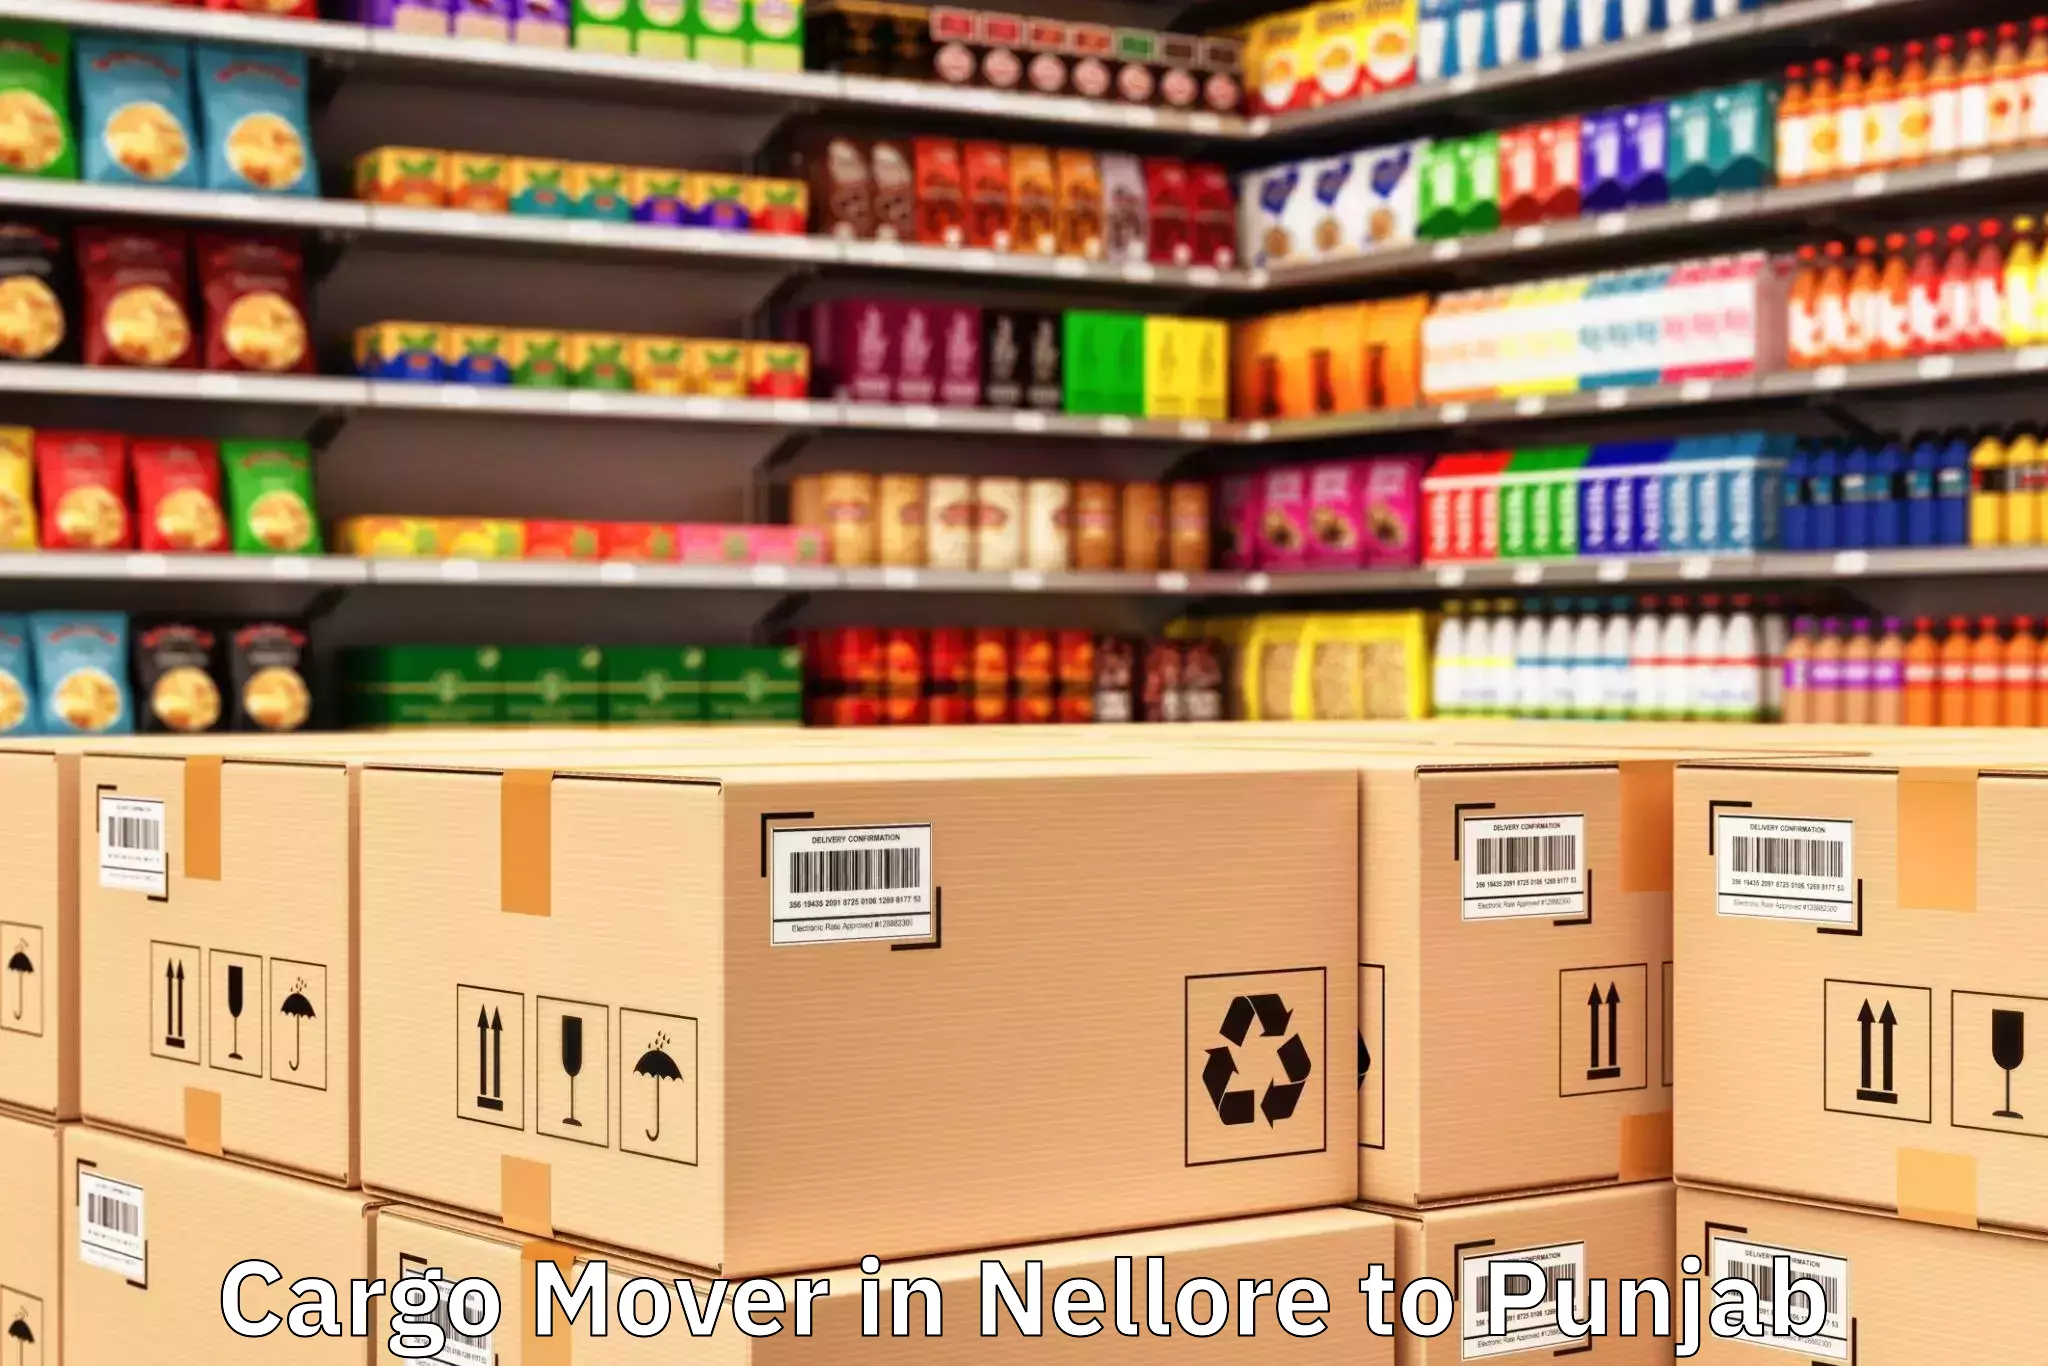 Top Nellore to Cosmo Plaza Mall Cargo Mover Available